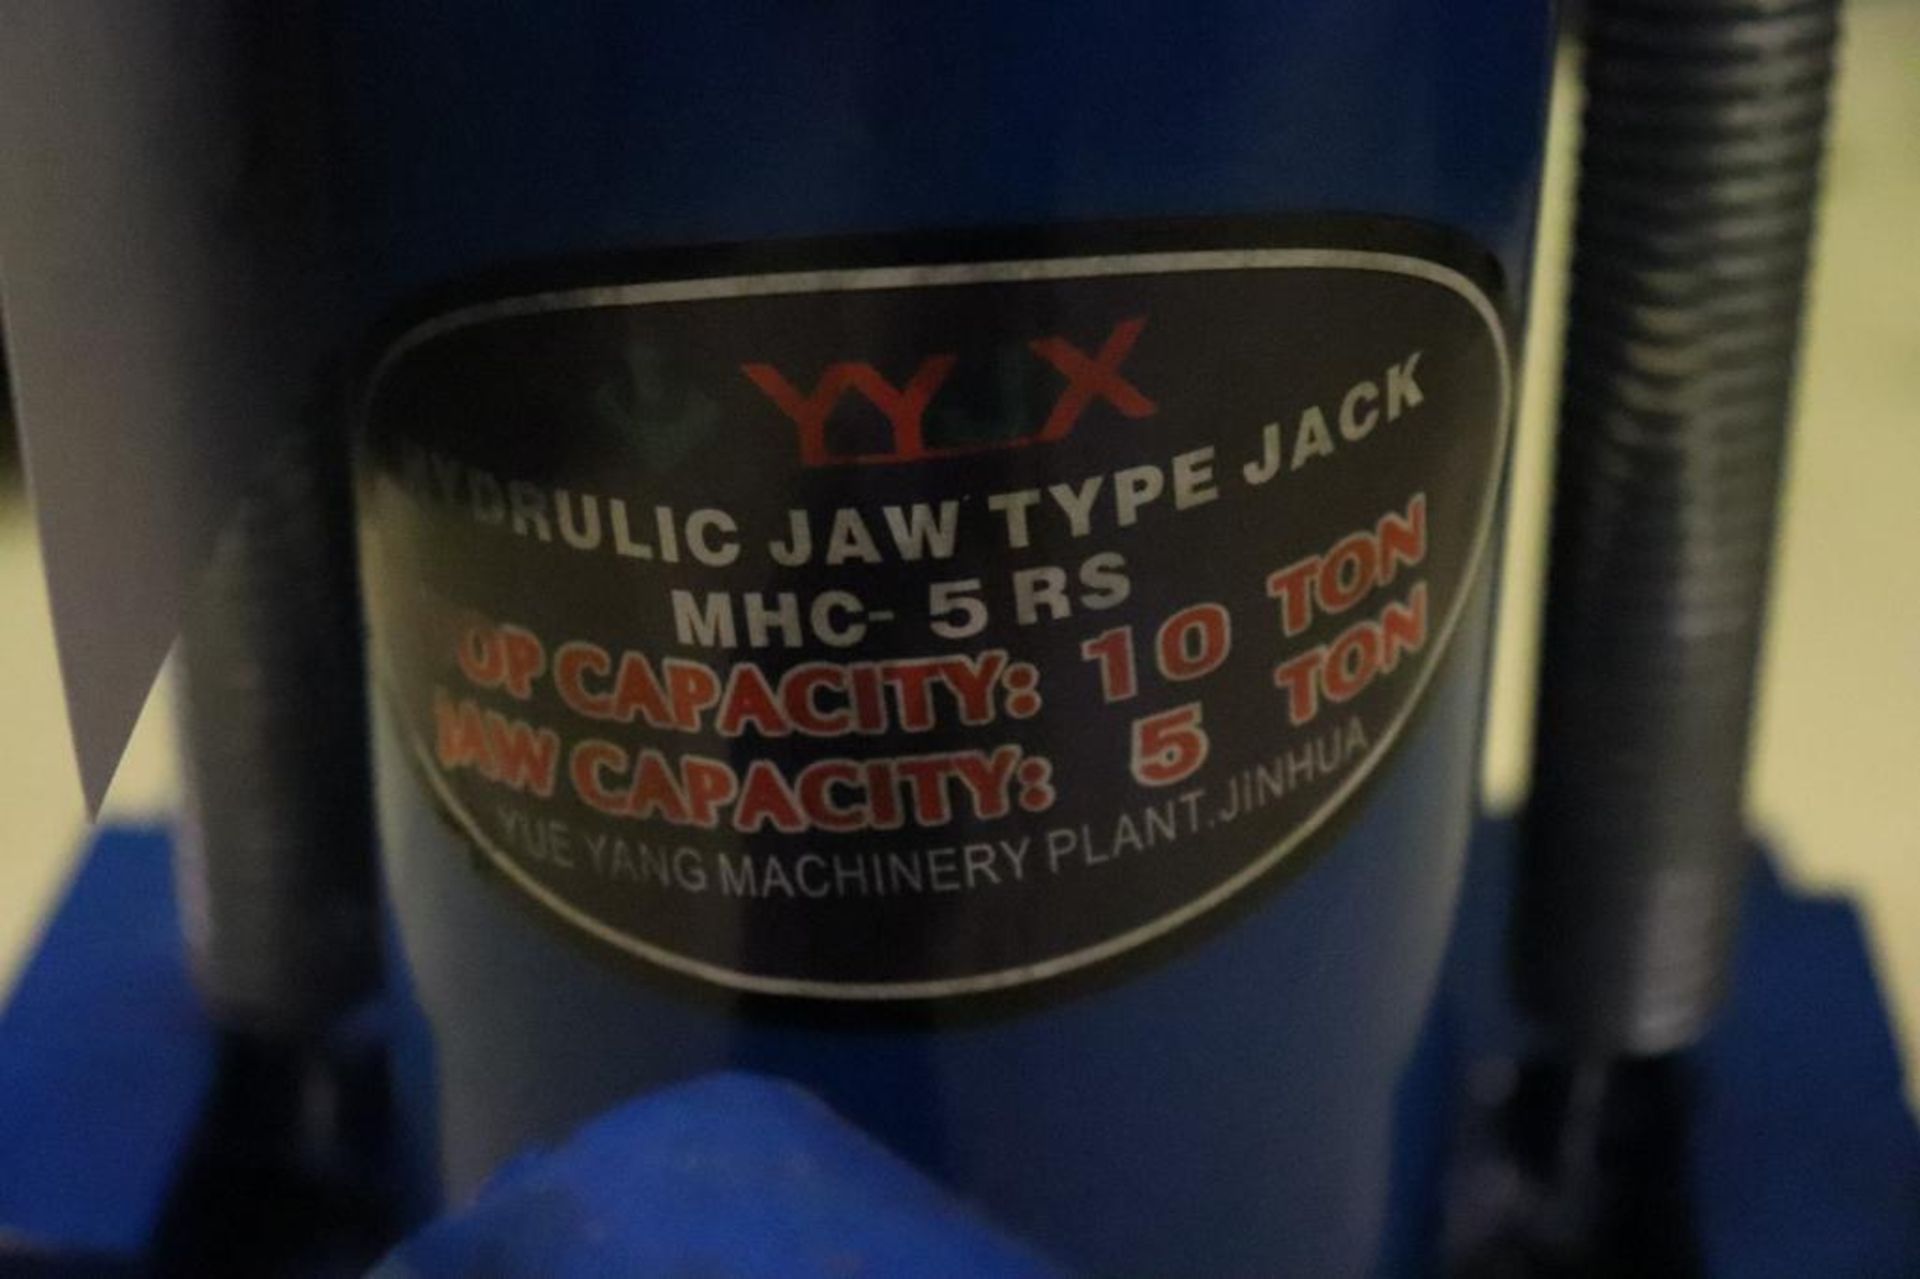 Model mhc-5RS hydraulic 10 ton toe jack - Image 2 of 4